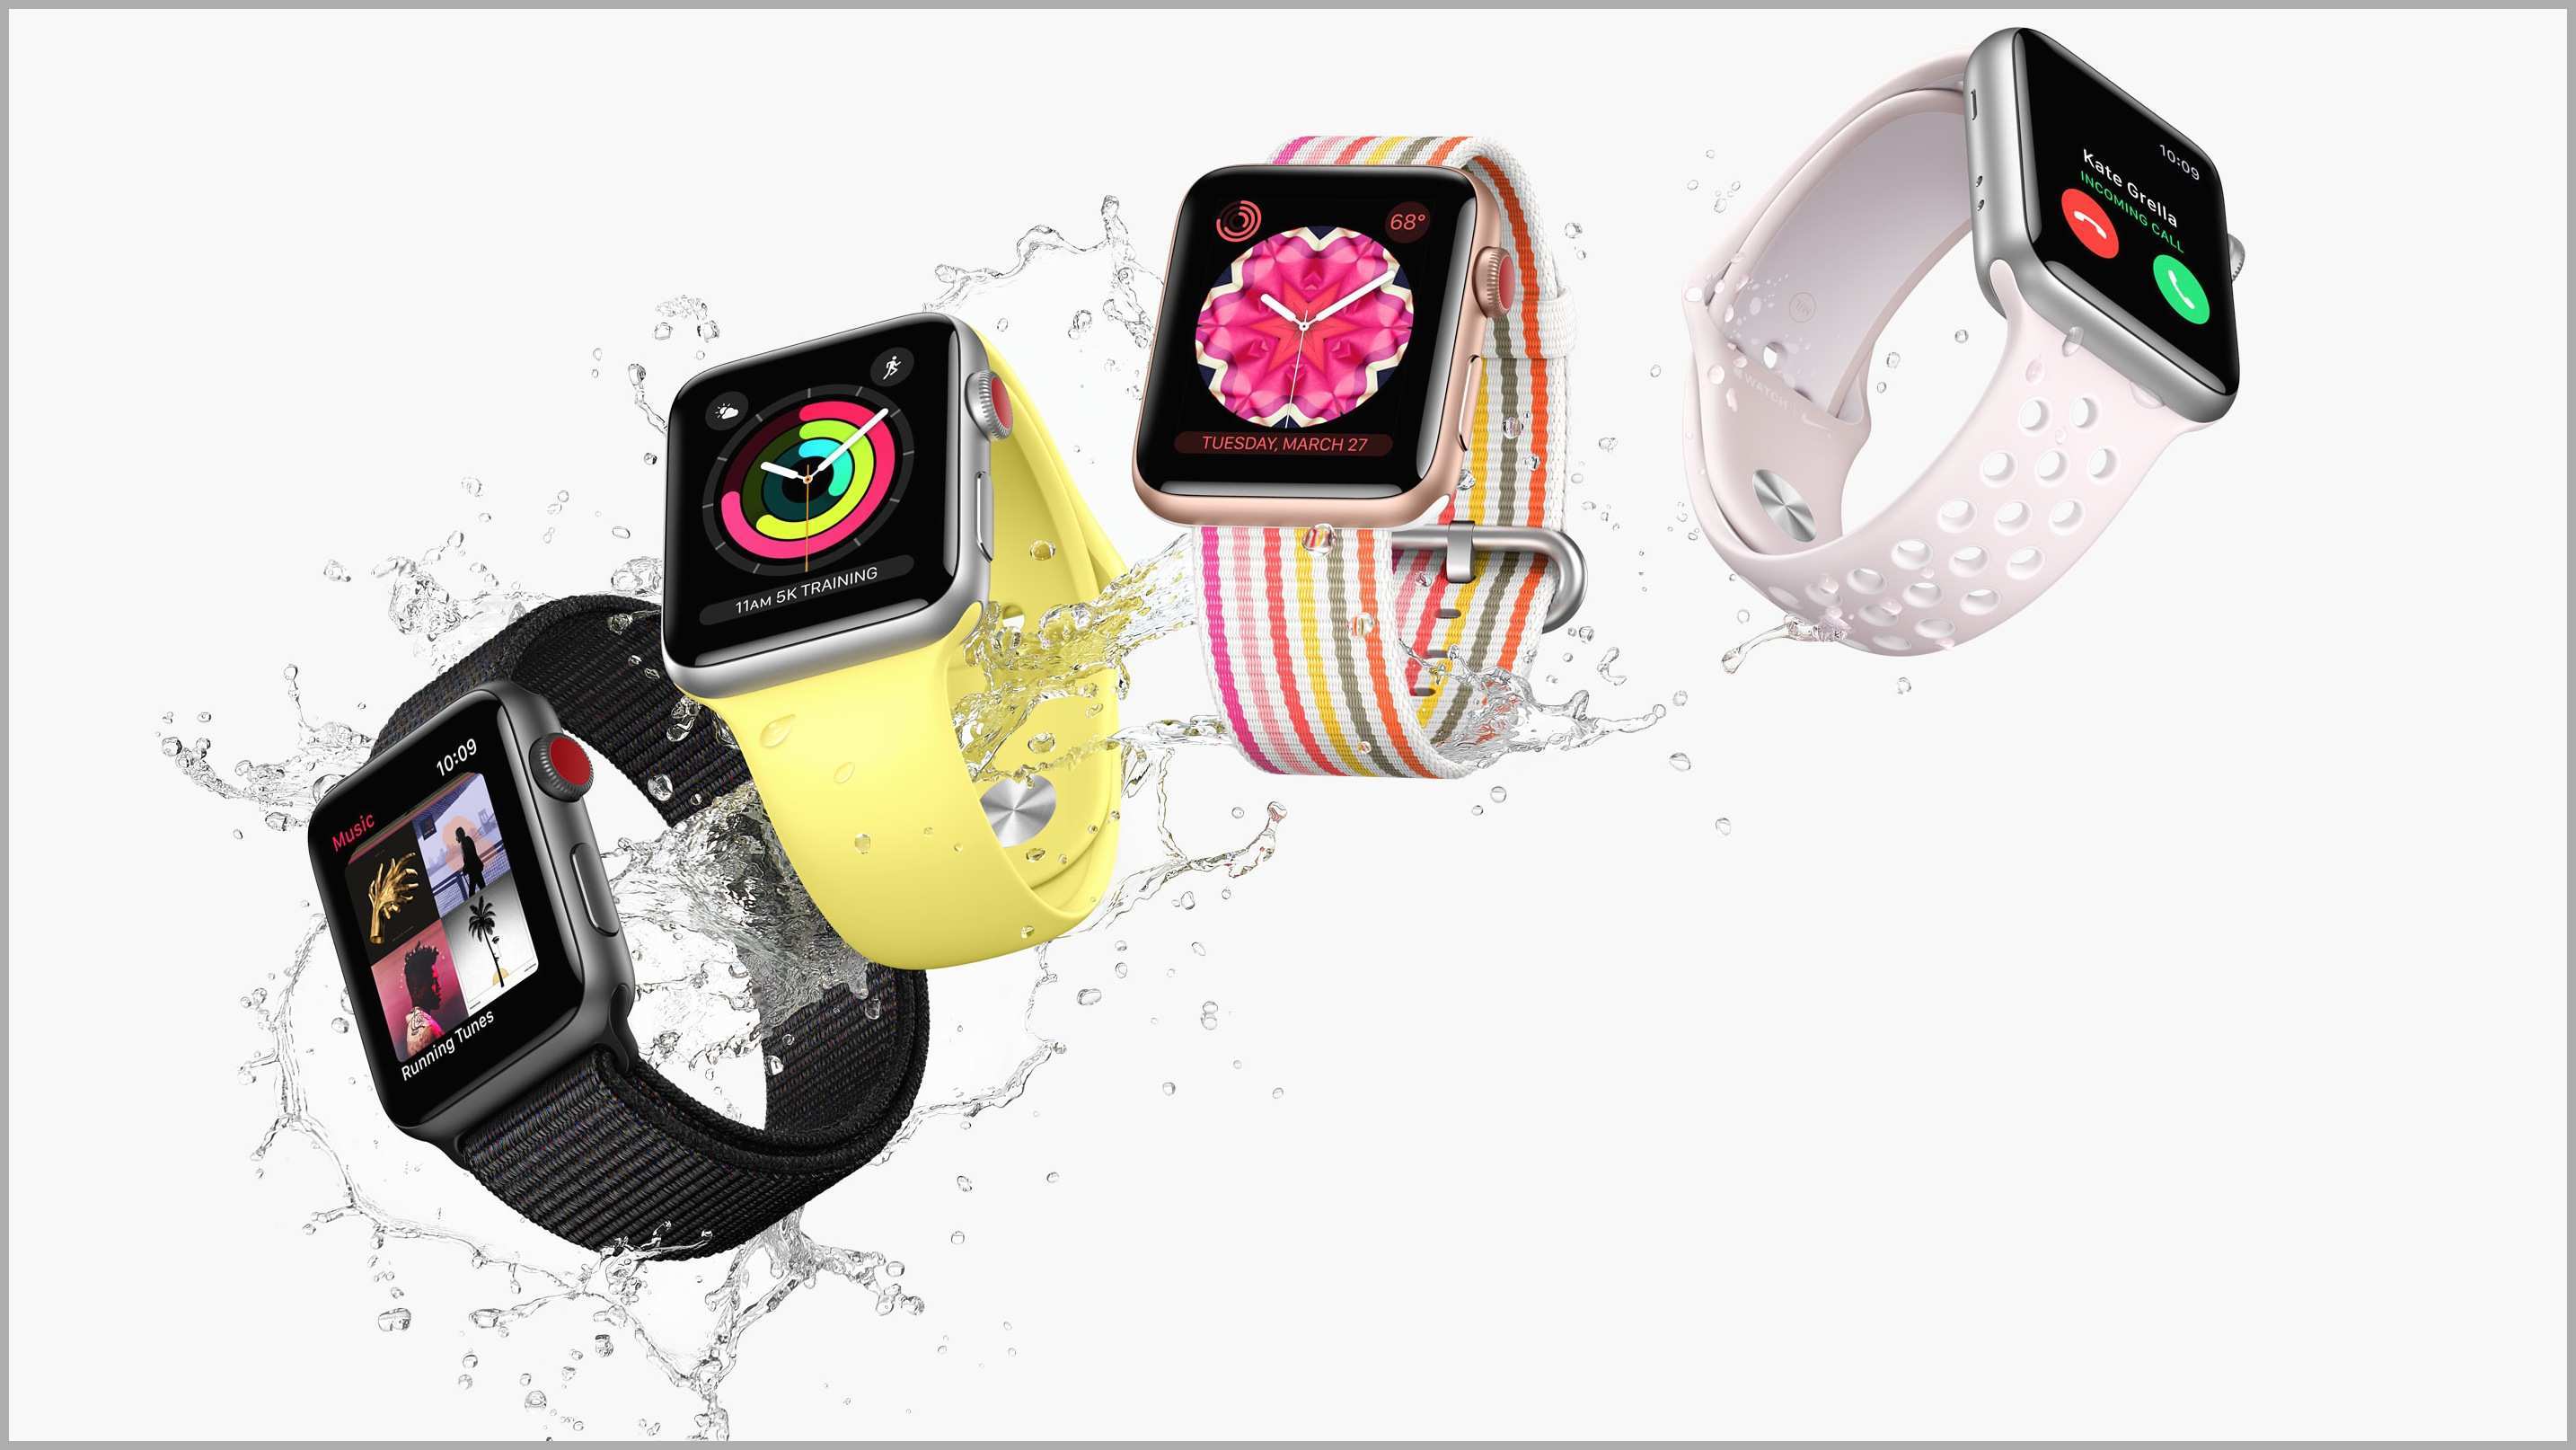 Apple Watch Series 4 , HD Wallpaper & Backgrounds